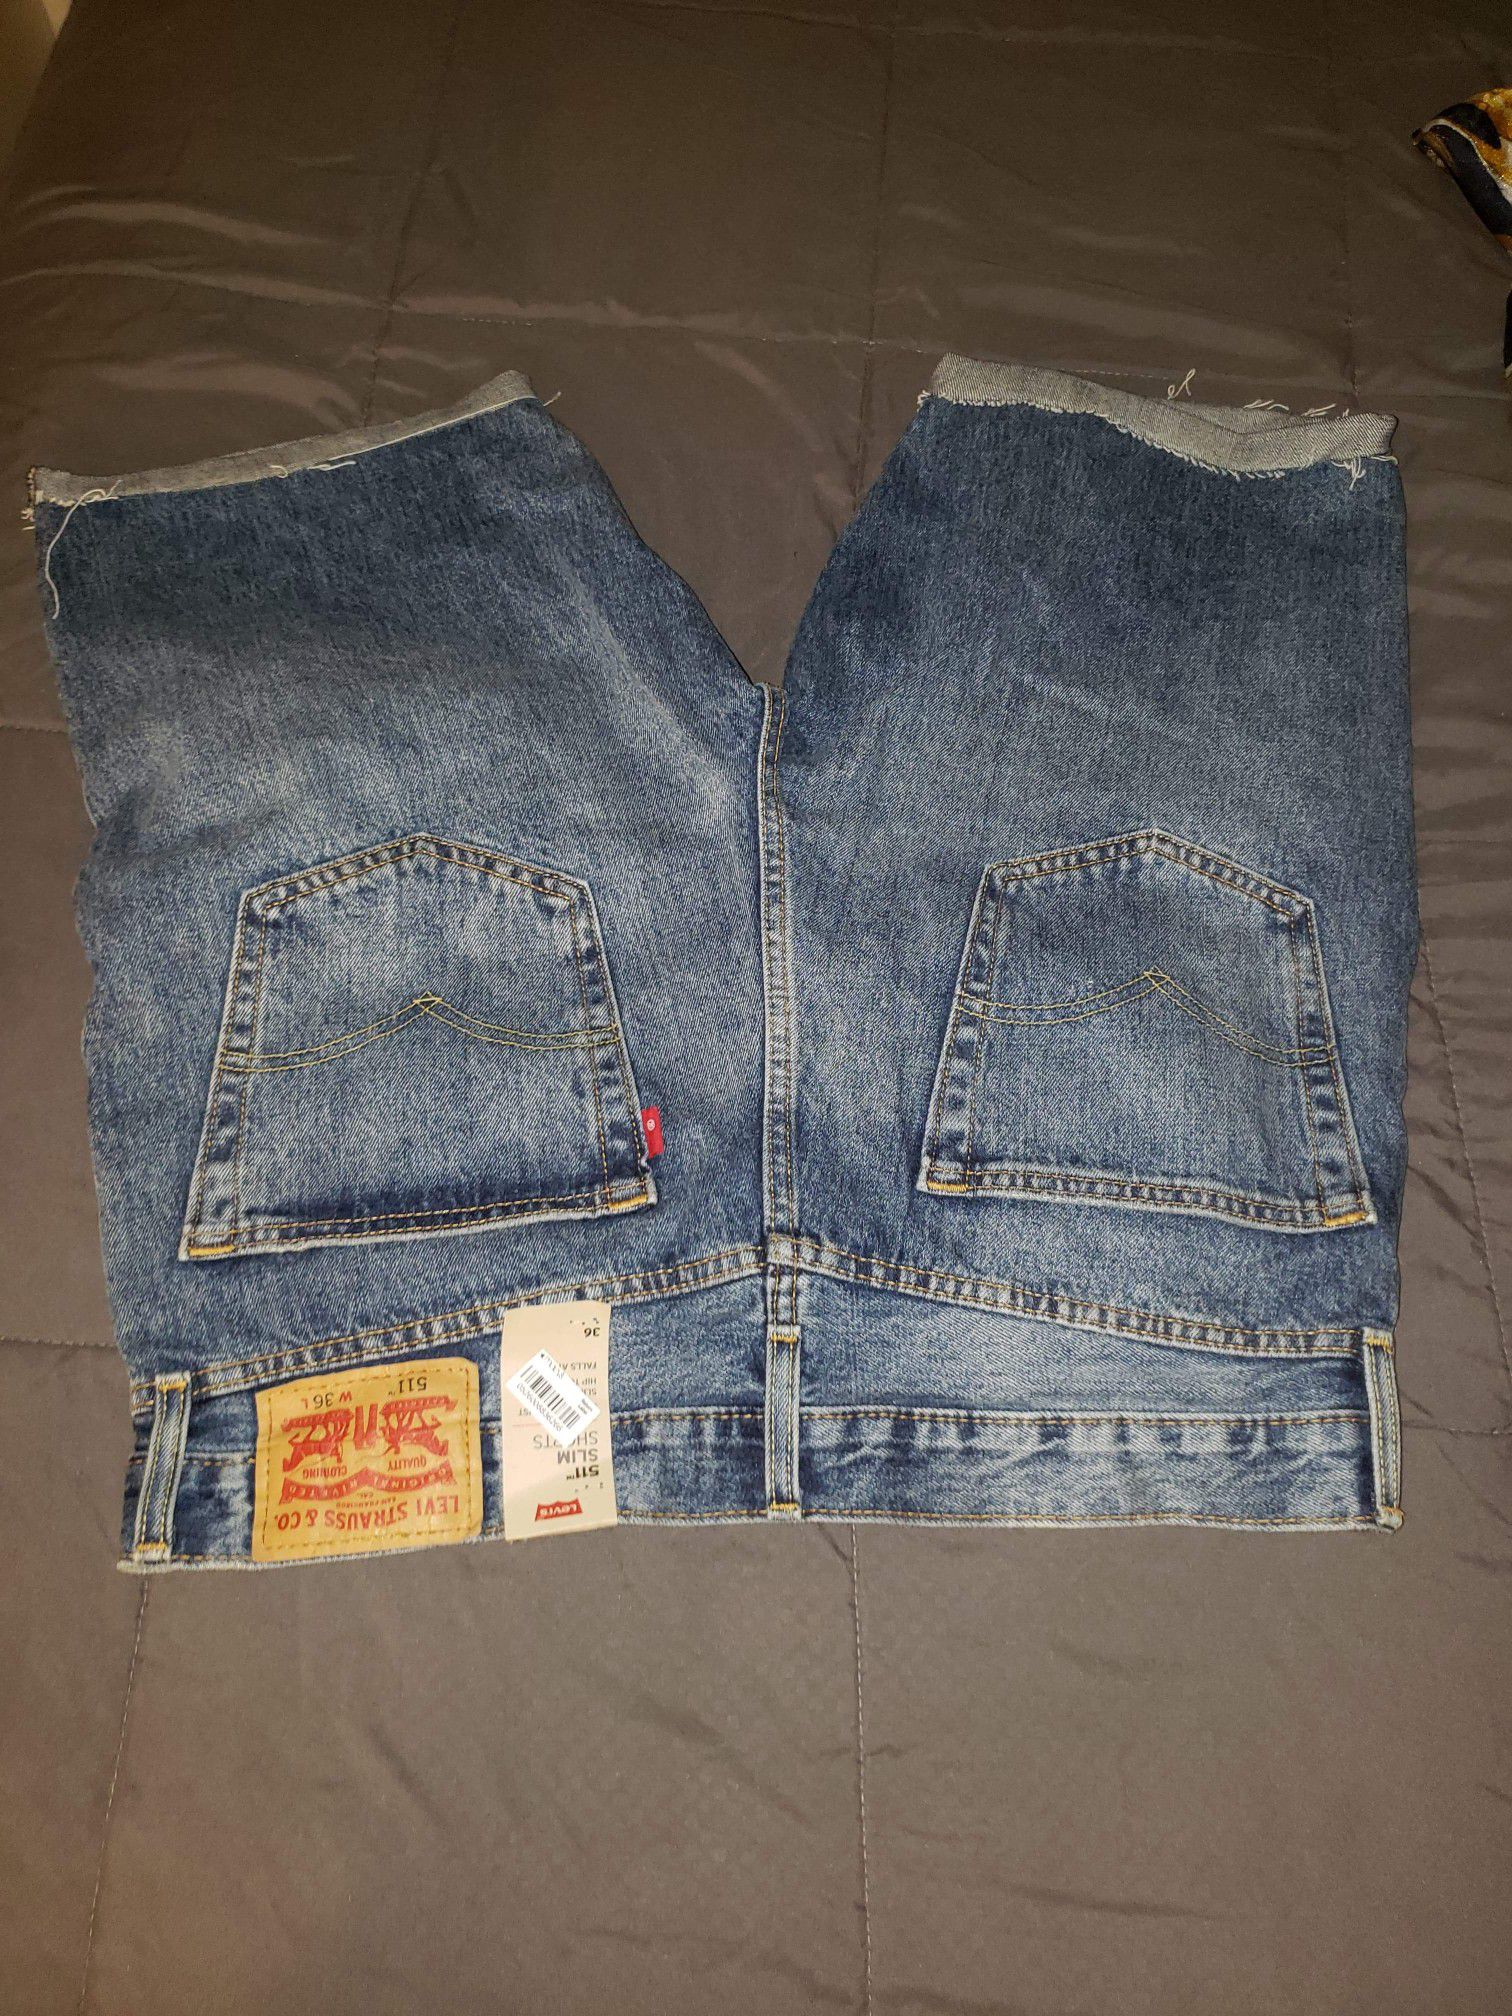 Brand New short jeans Levi 511 sz 36